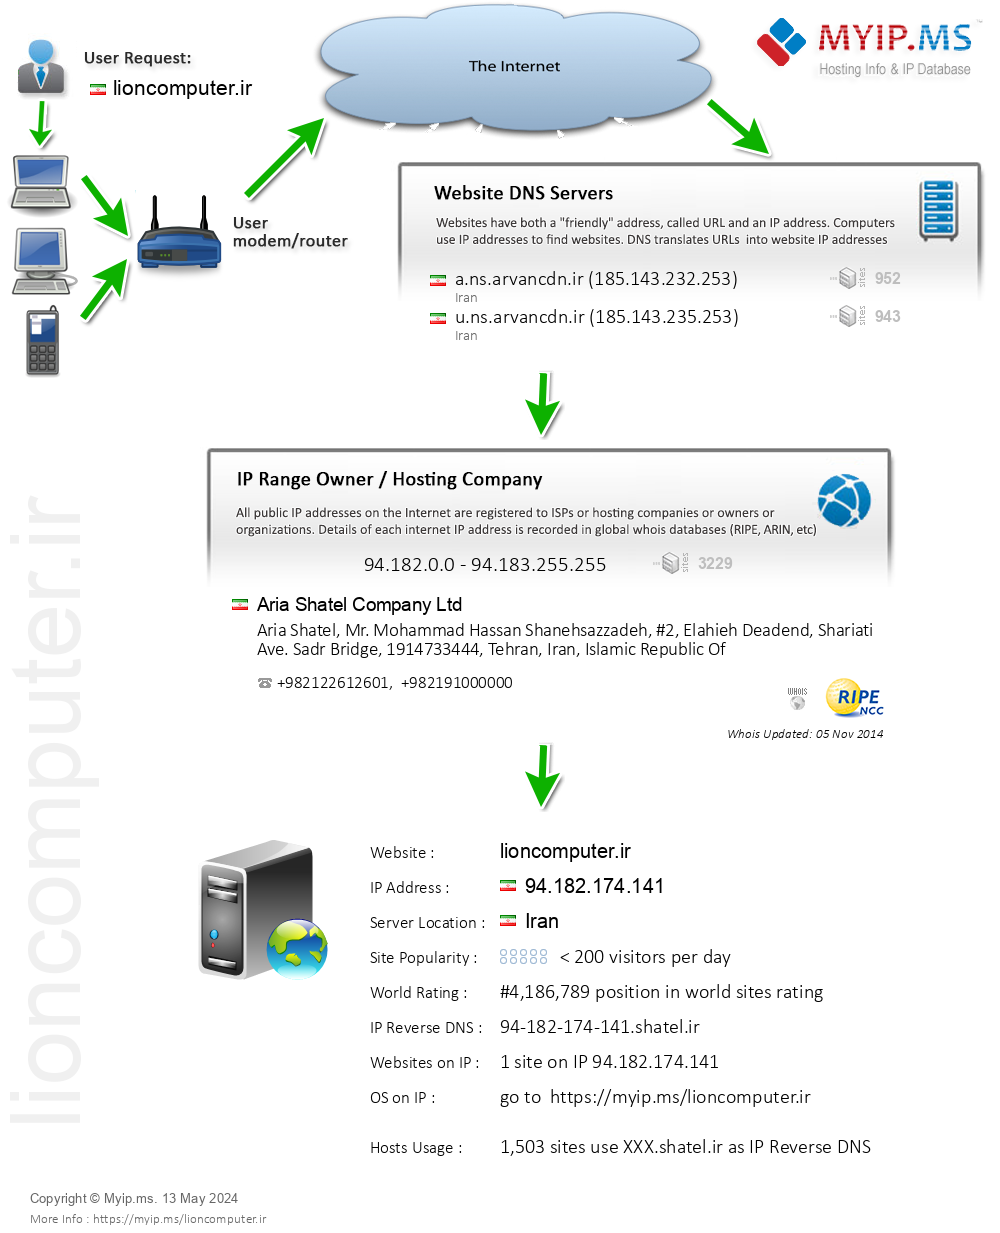 Lioncomputer.ir - Website Hosting Visual IP Diagram